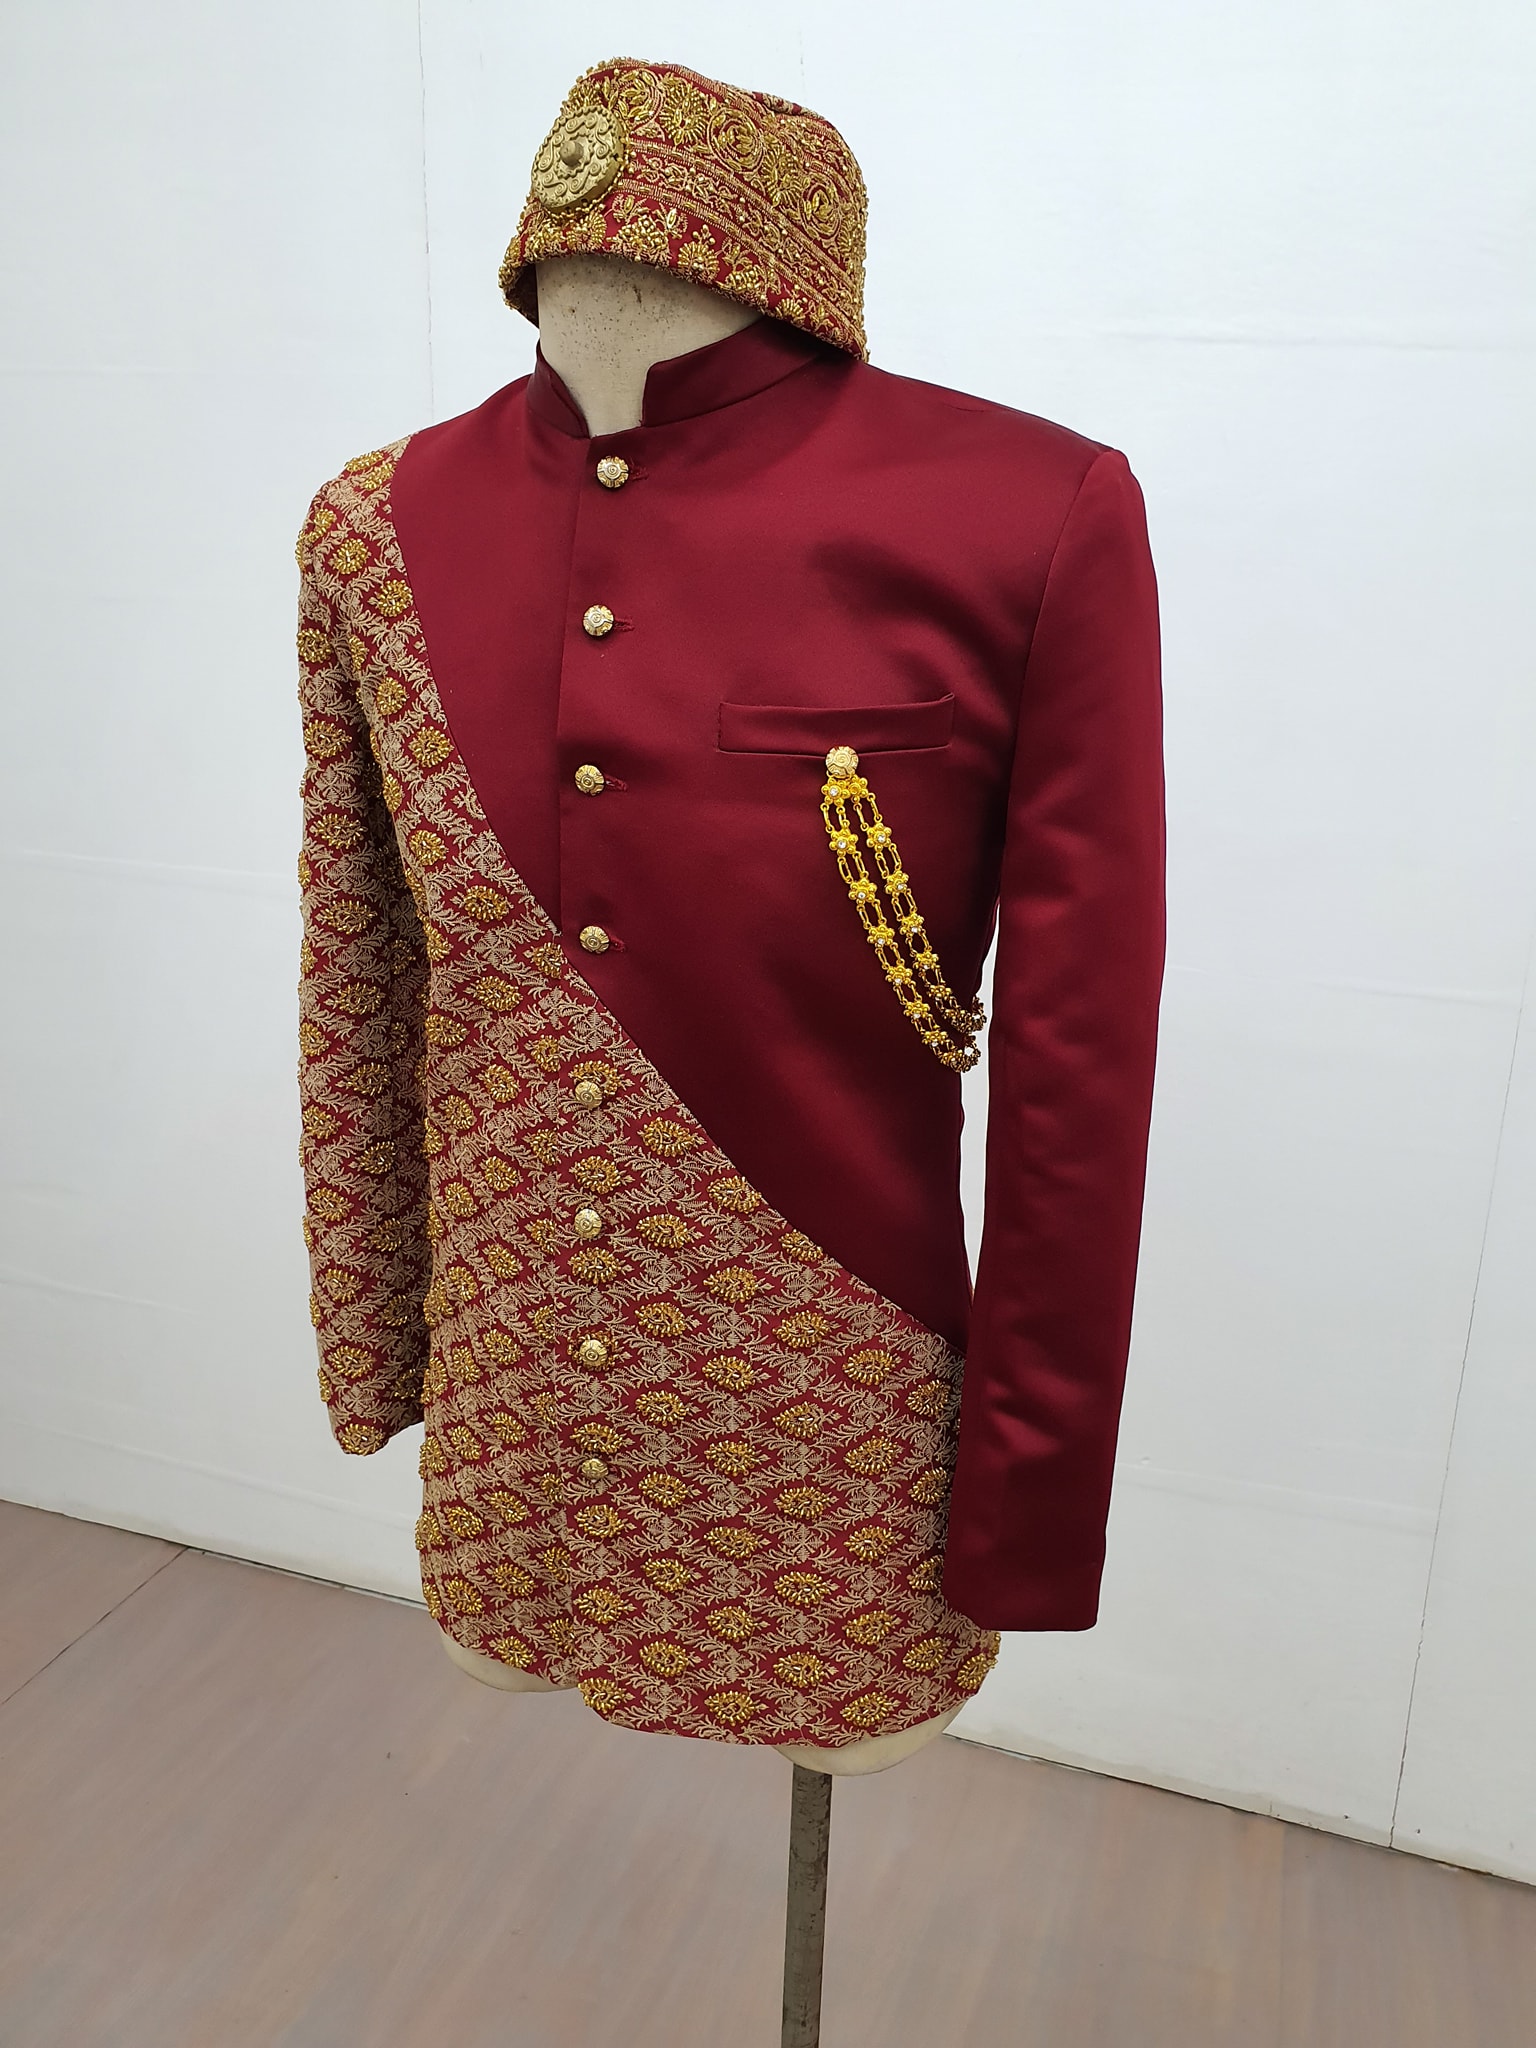 Bai Rihan Mangudadatu Sakaluran - Al-shadat Hassan Abdurajak's red royal suit